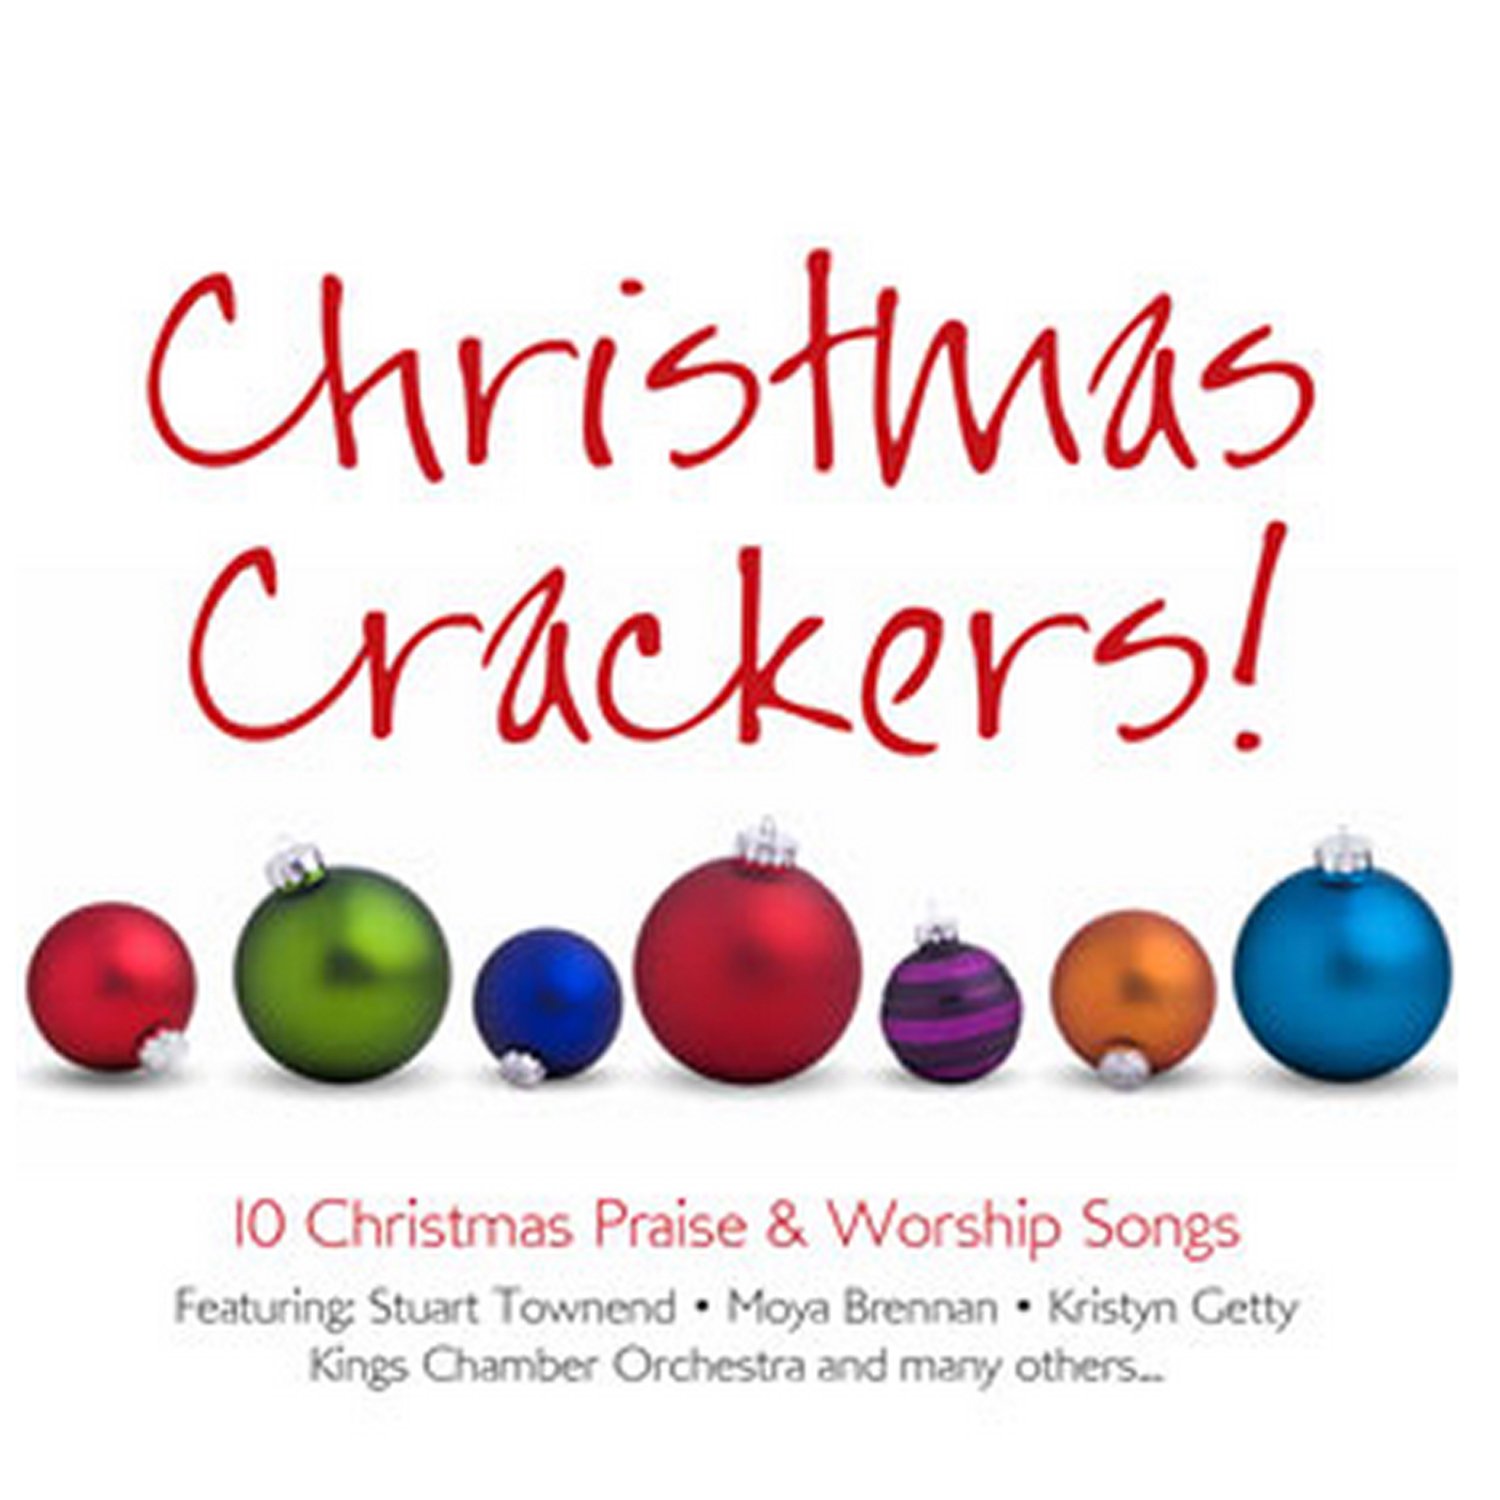 Christmas Crackers! CD - Various